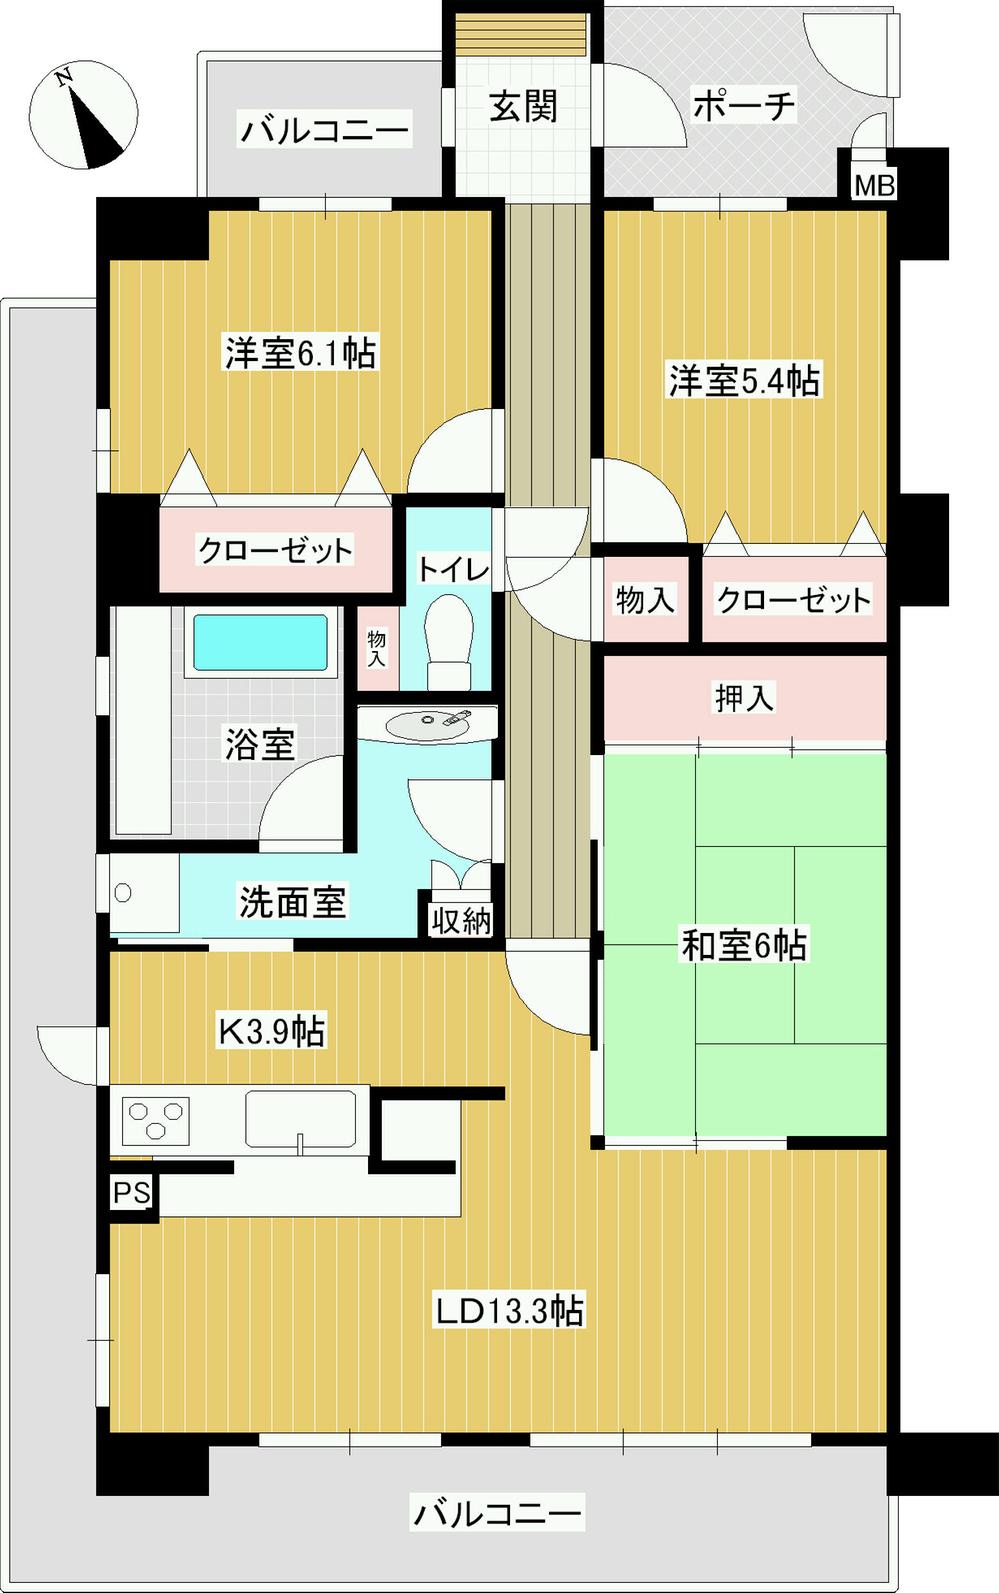 Floor plan. 3LDK, Price 23 million yen, Footprint 82.8 sq m , Balcony area 26.66 sq m